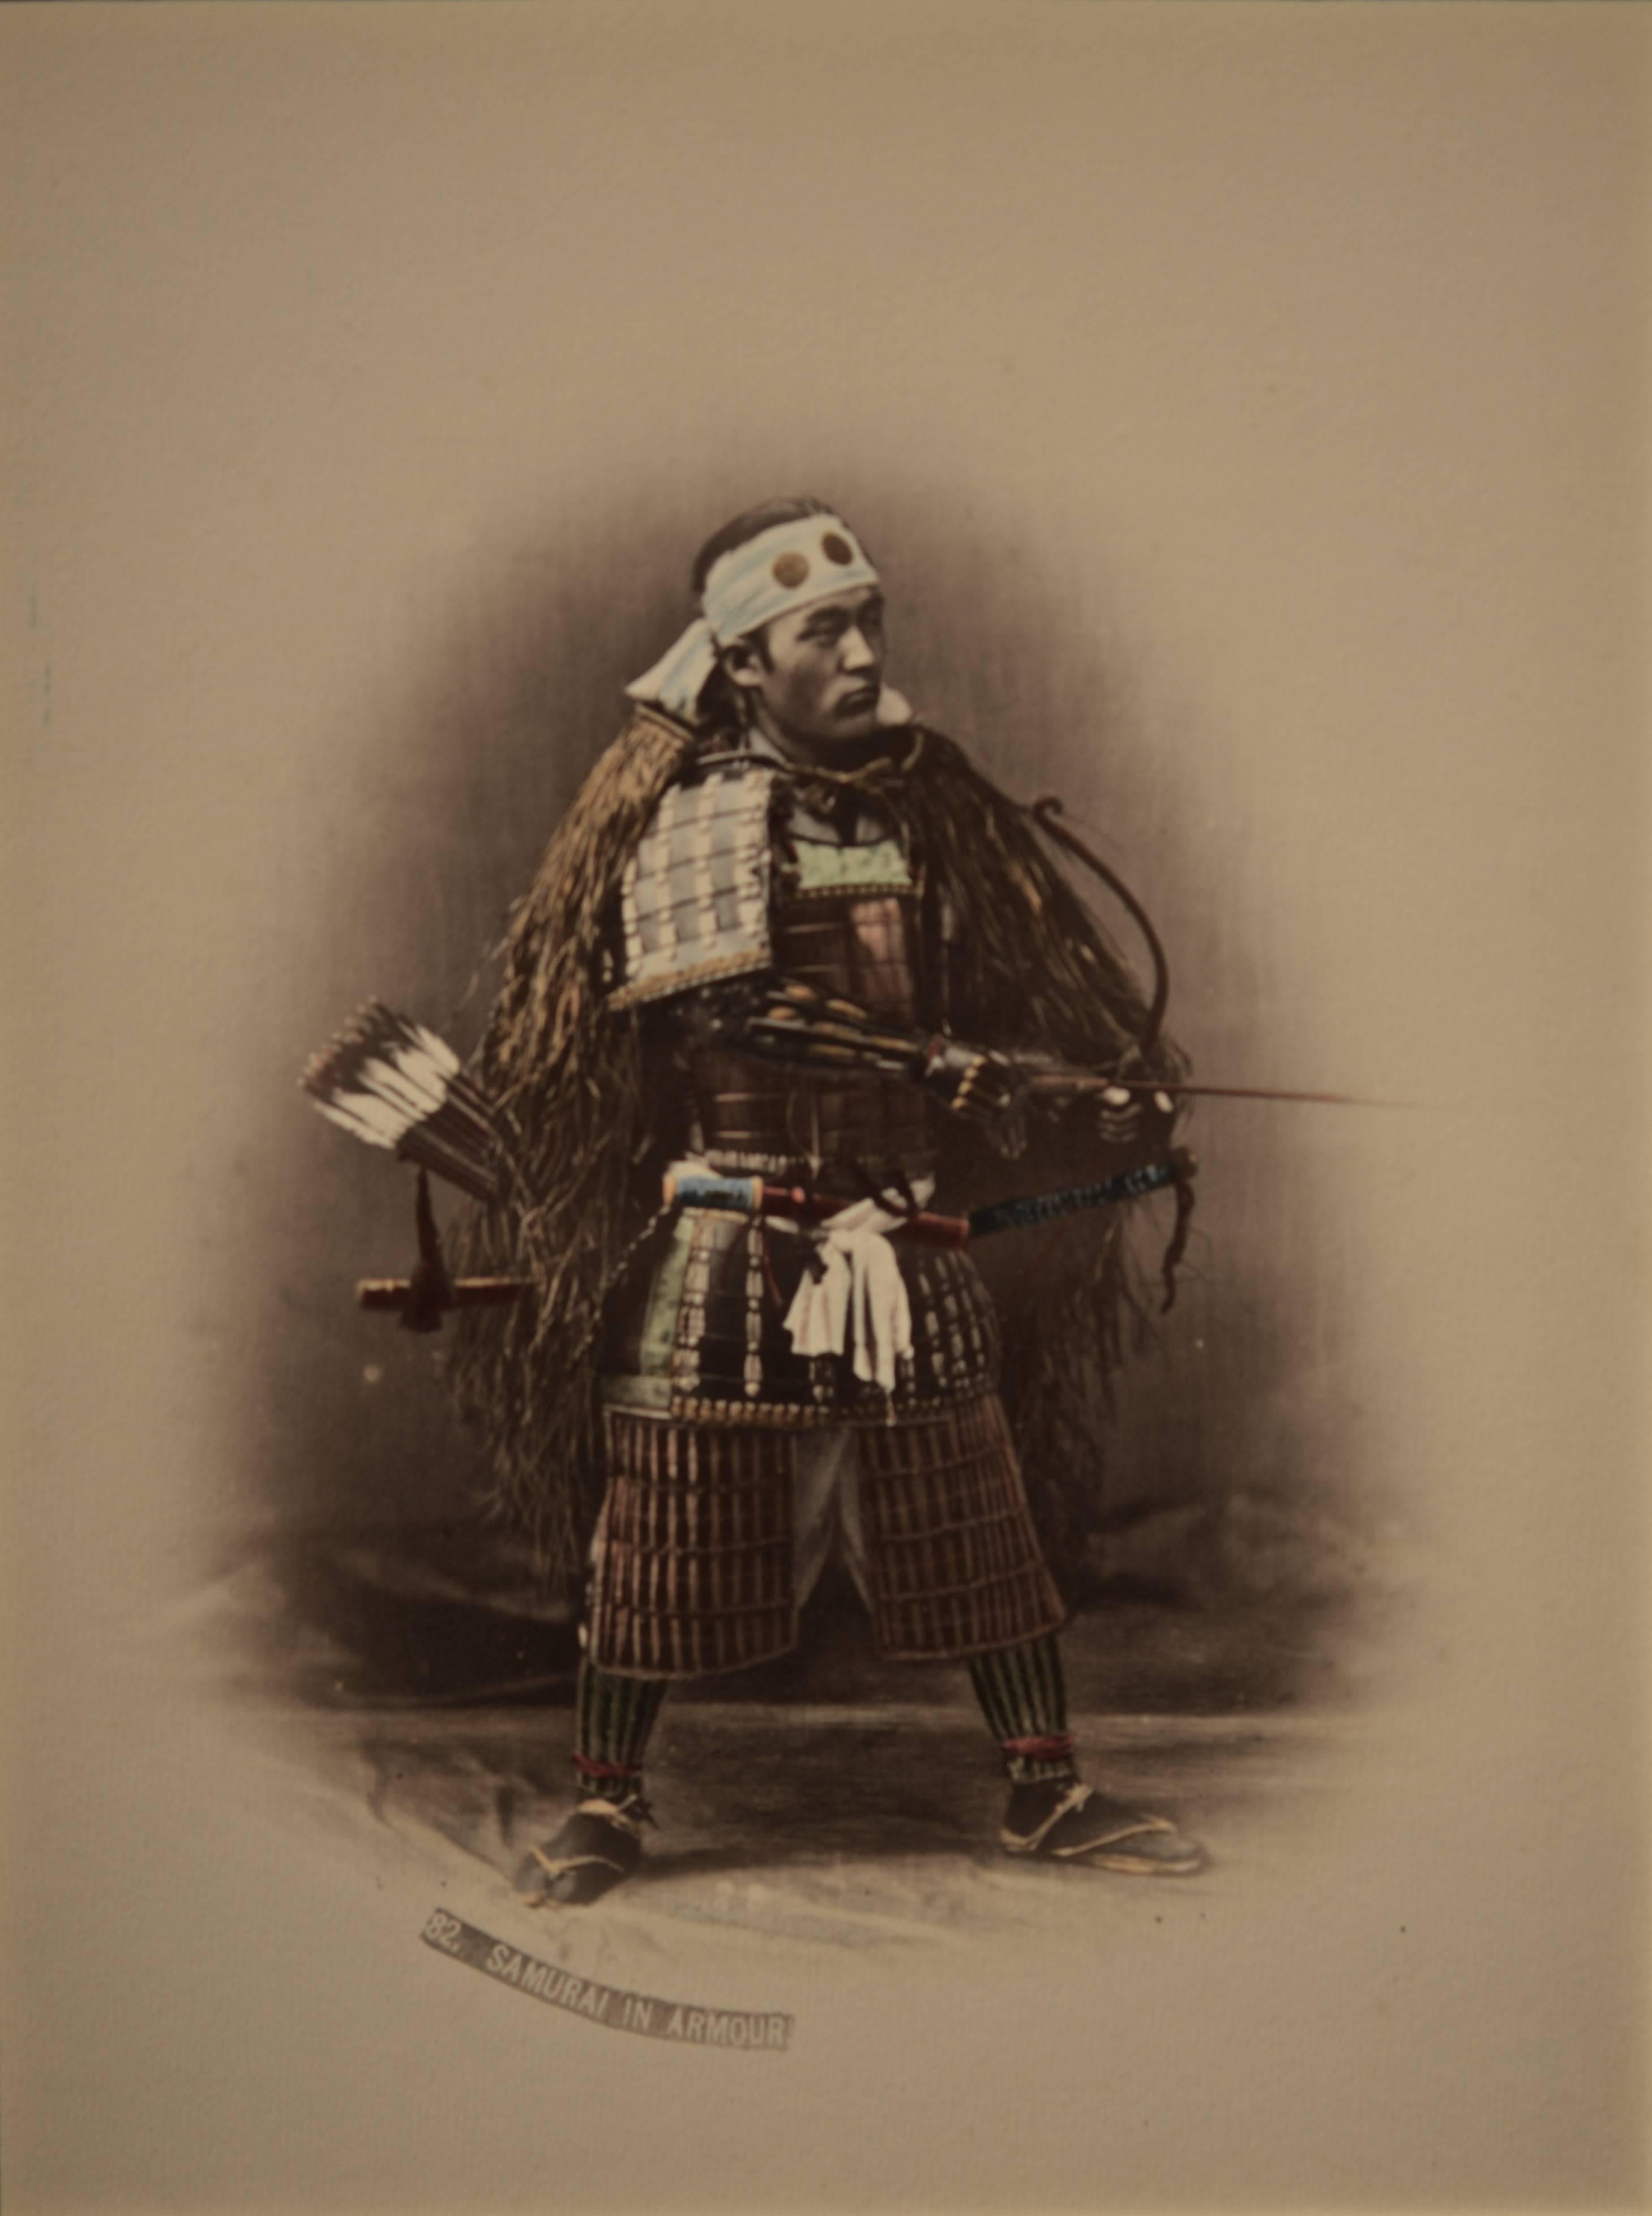 Unknown Black and White Photograph - Photograph of a Samurai